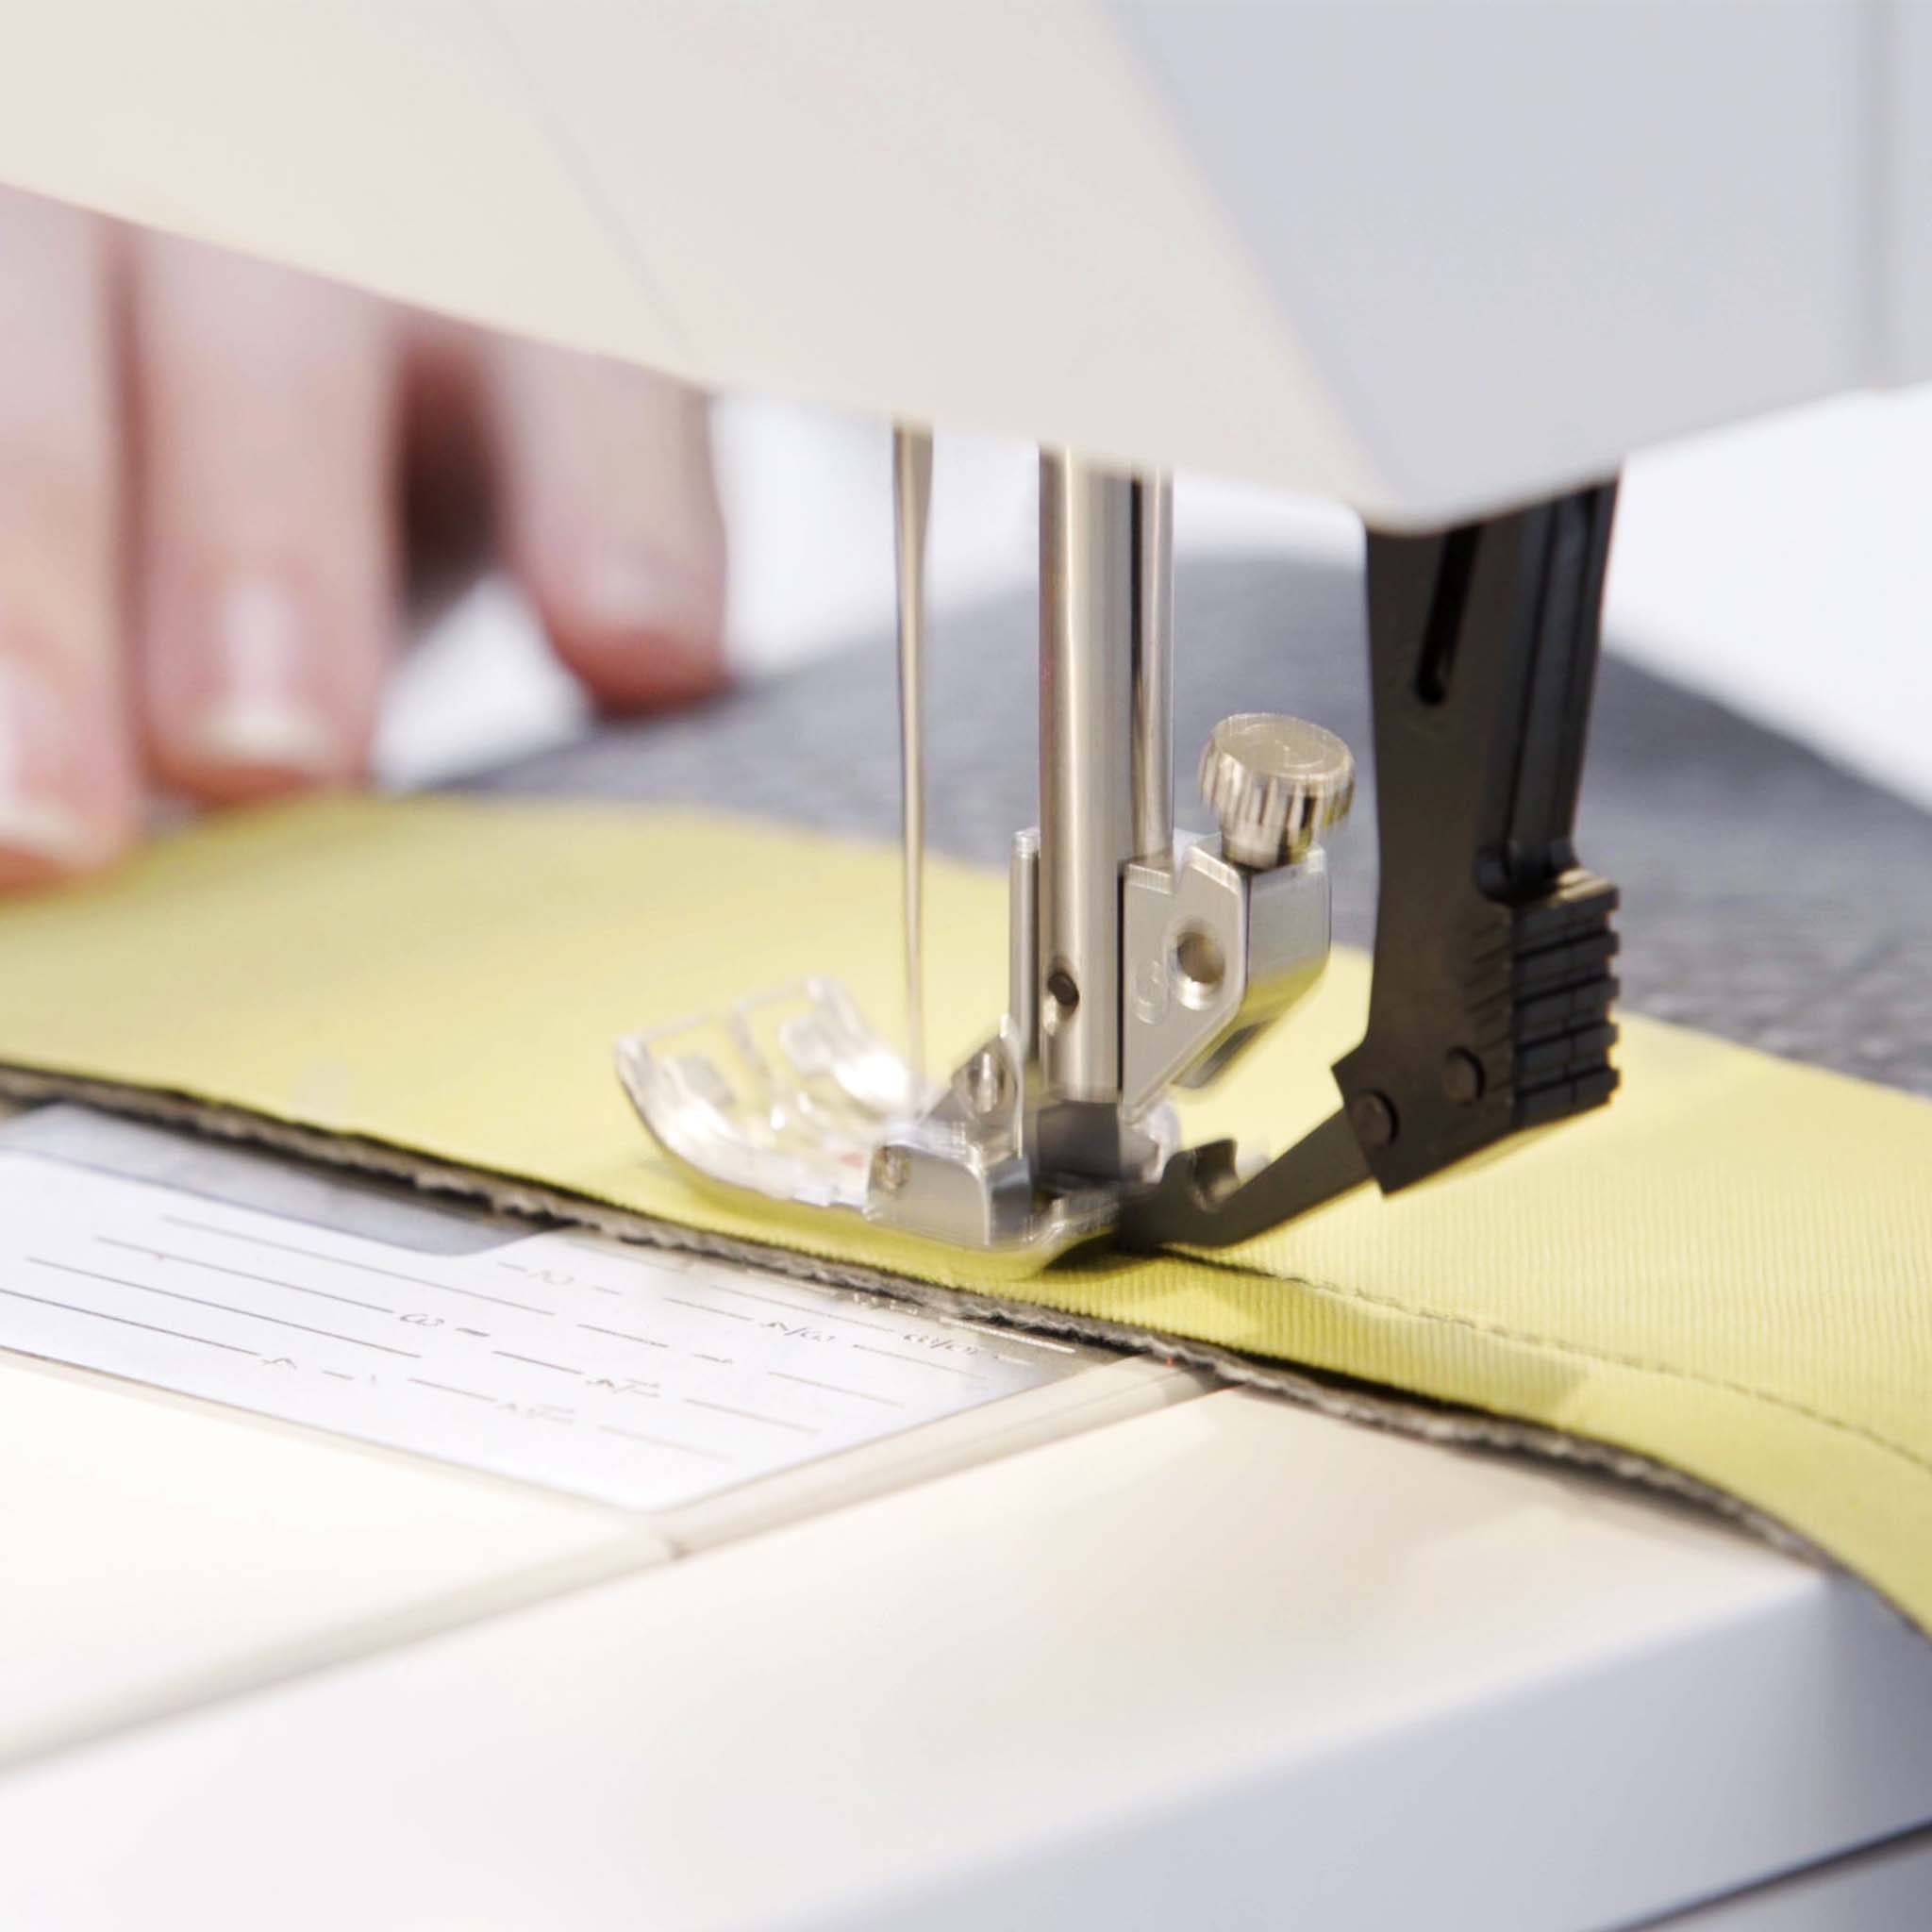 Pfaff Quilt Expression 720 Sewing & Quilting Machine